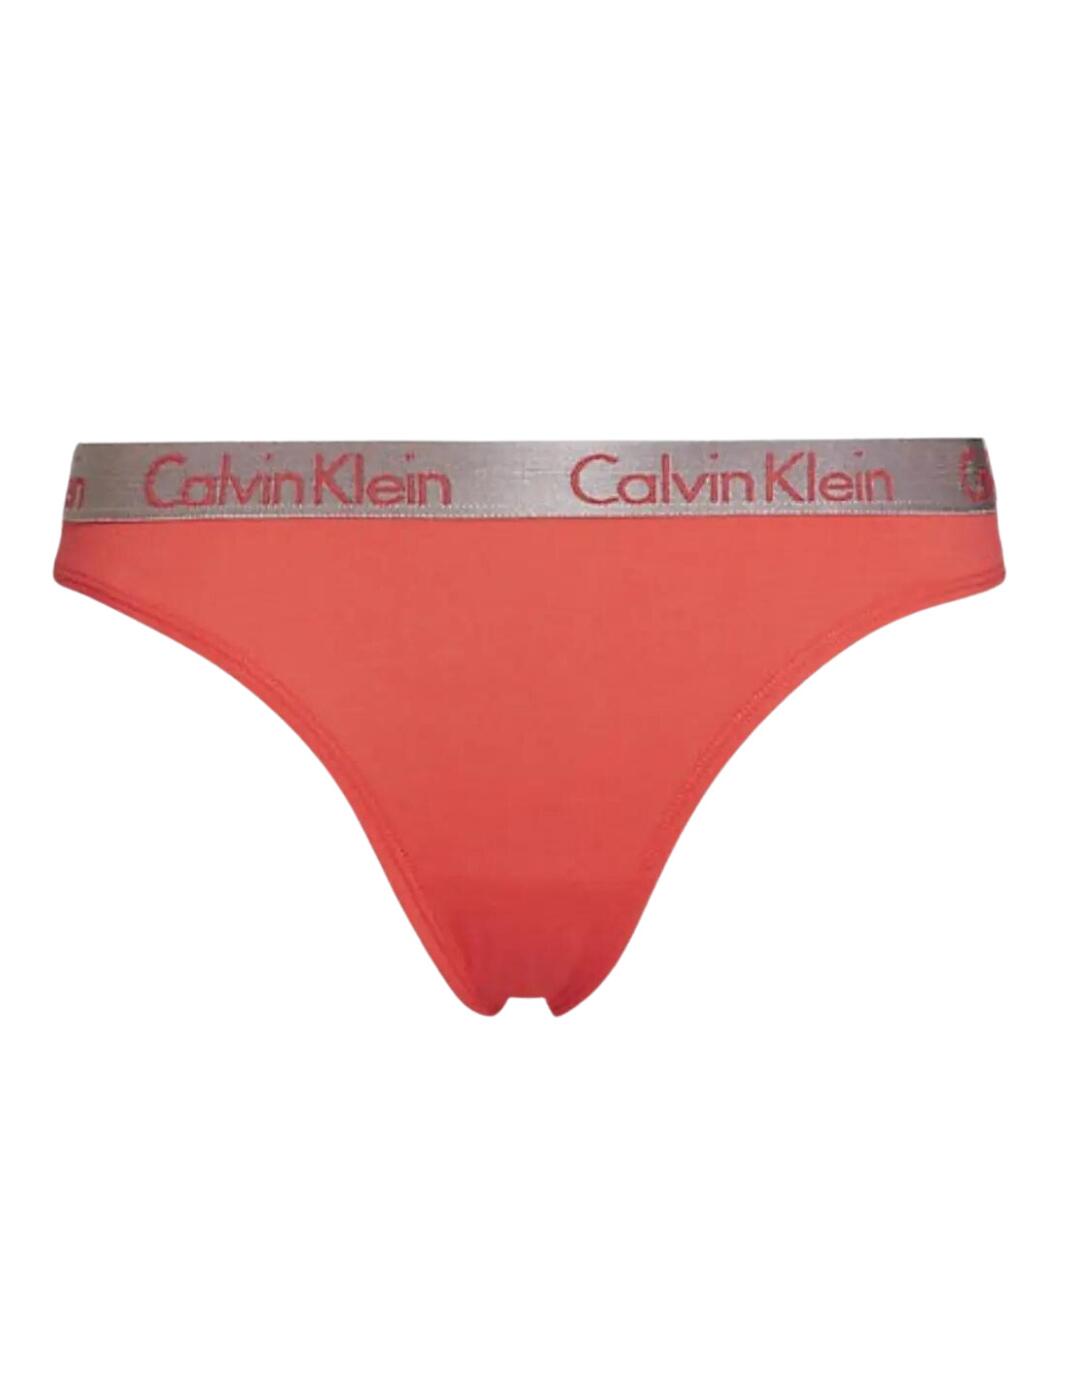 Calvin Klein Radiant Cotton Thong Marlow